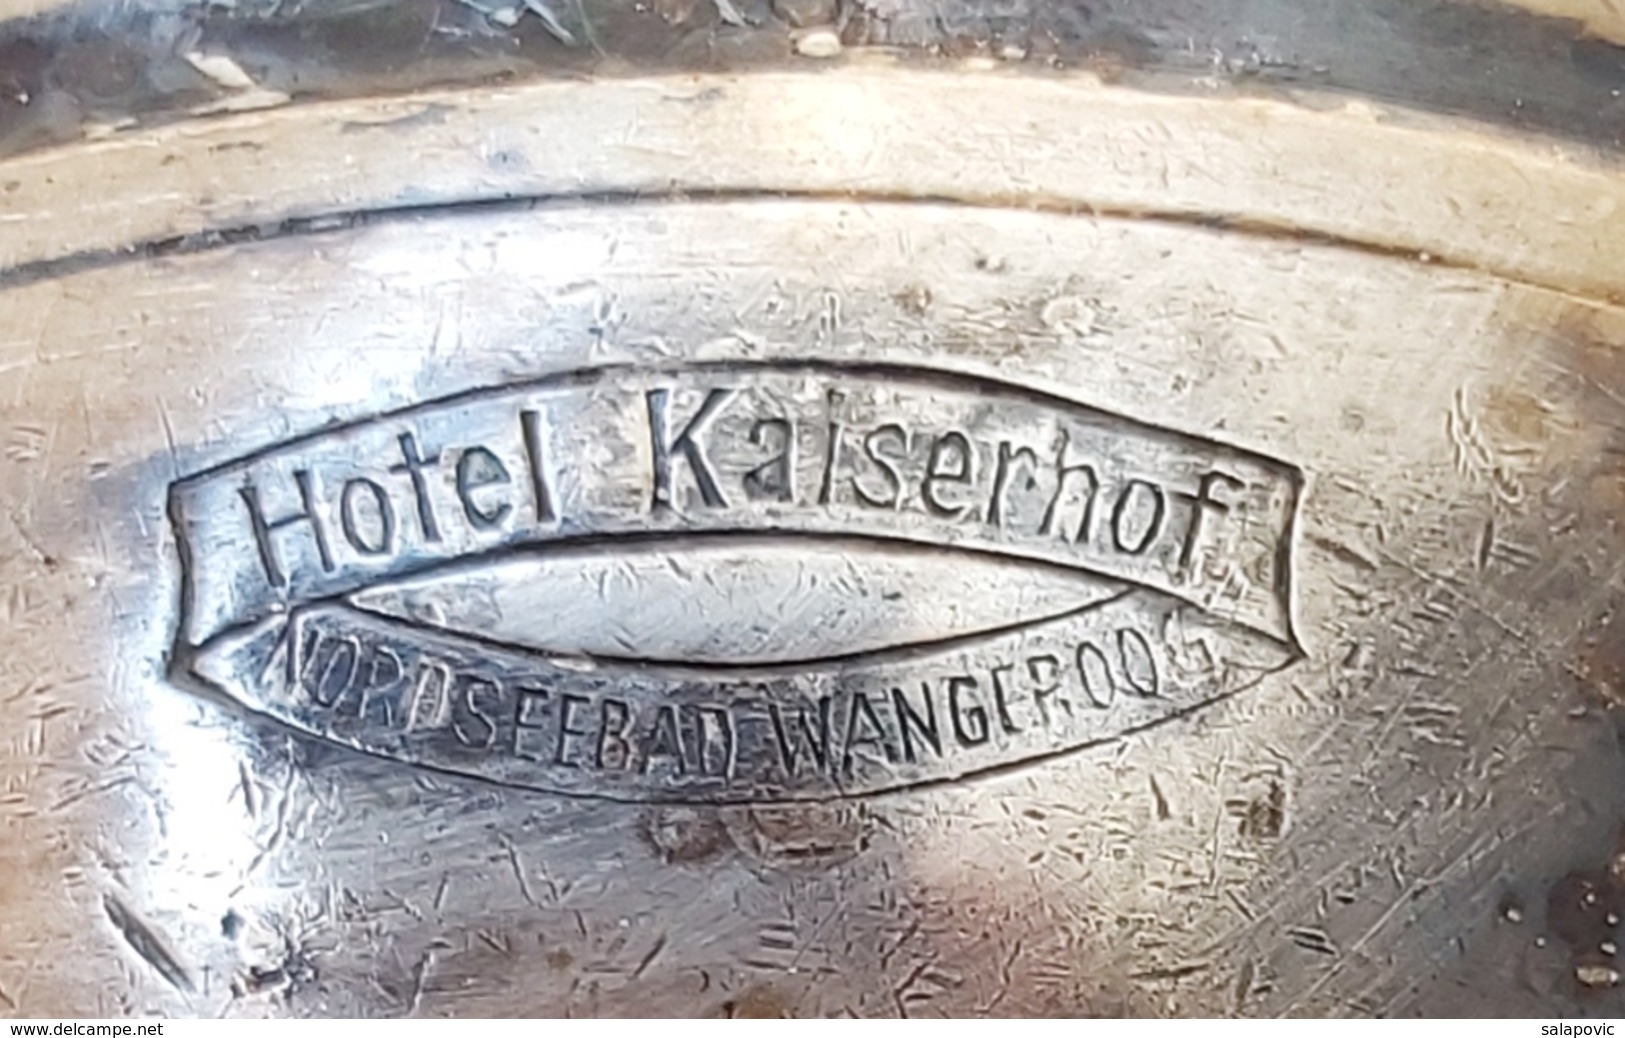 Old Cup Wine Glass Hotel Kaiserhof, Nord Seebad Wangeroog - Tassen